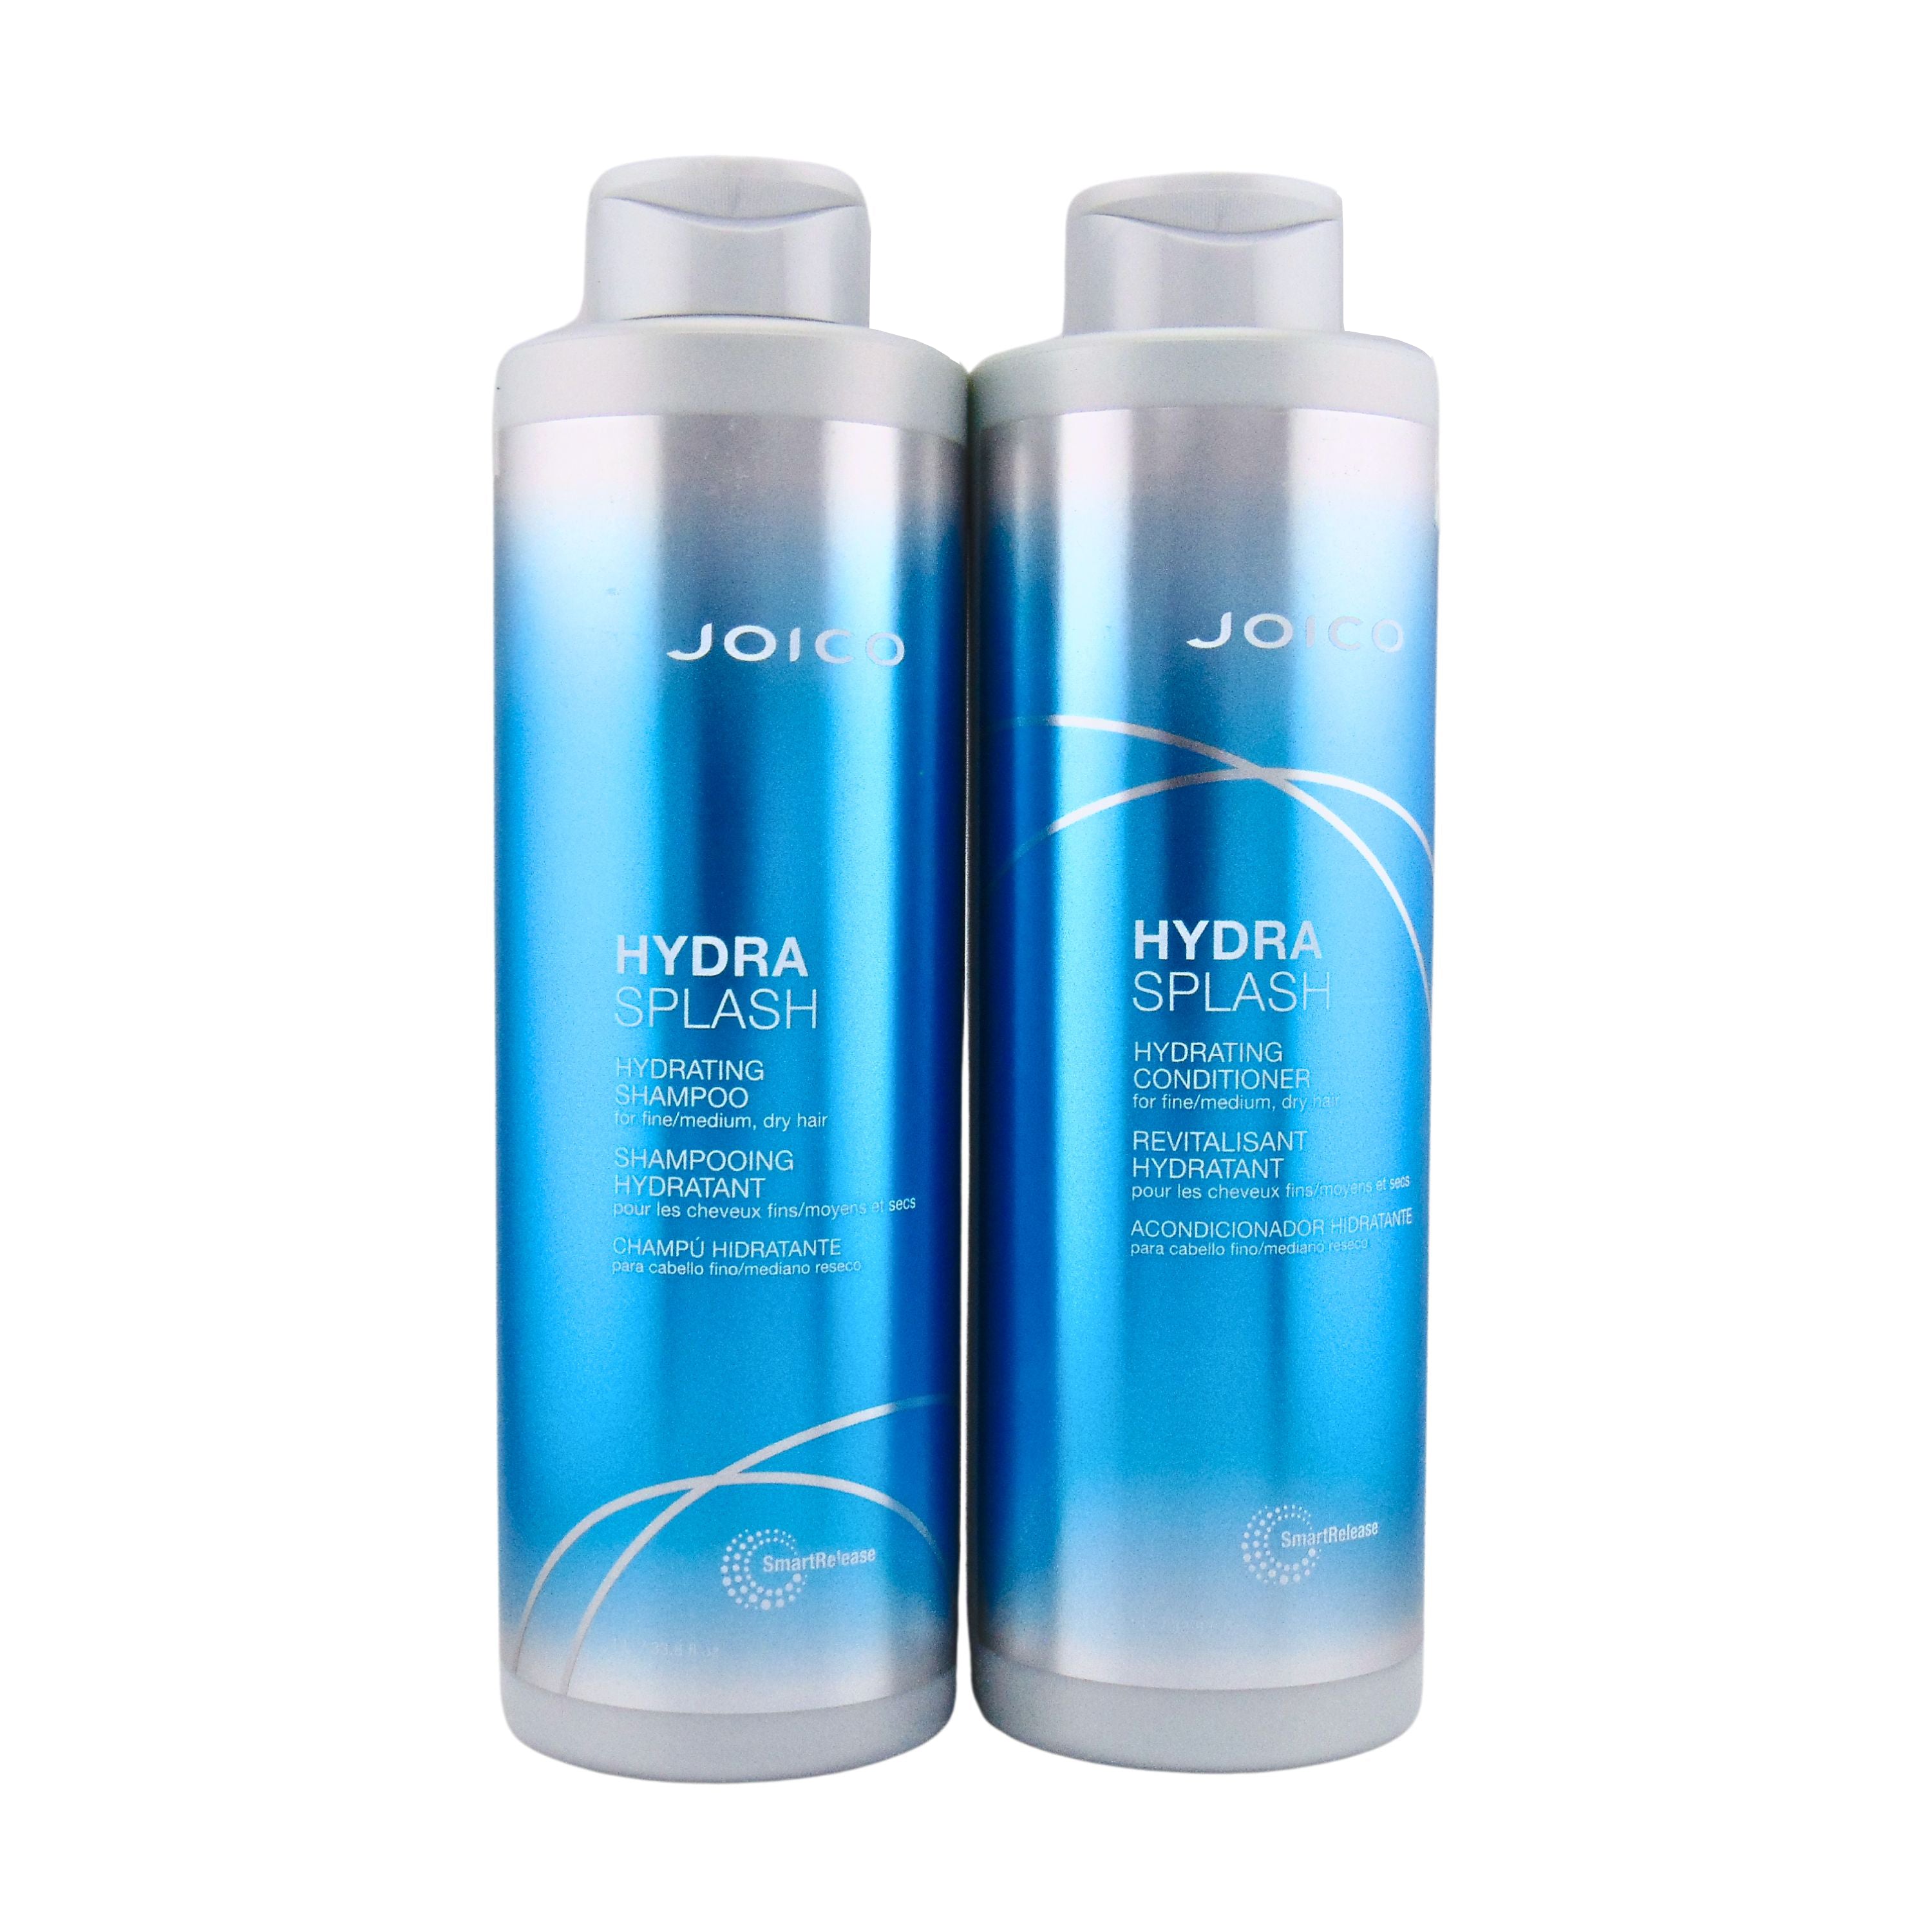 Joico HydraSplash Duo (Hydrating Shampoo and Conditioner)